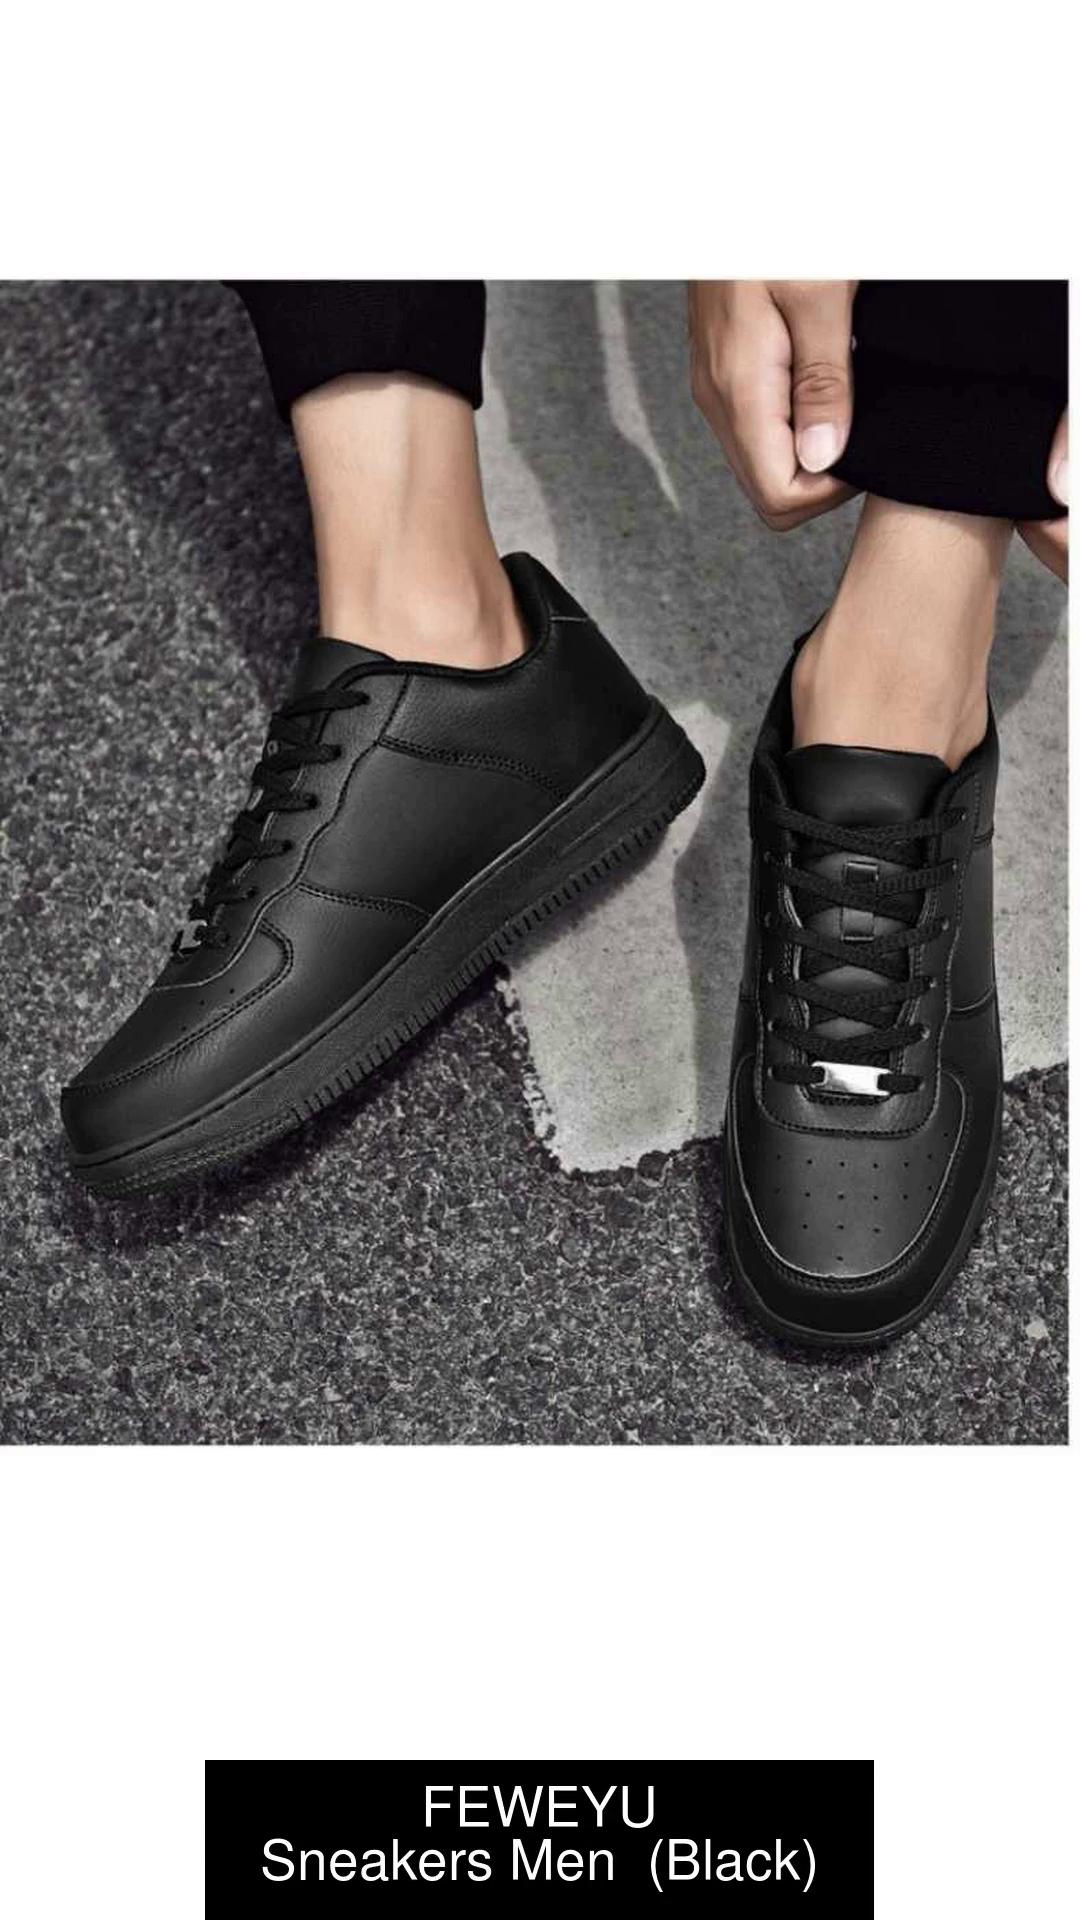 FEWEYU Fashionable casual sneaker shoes Sneakers For Men (Black) Men - Buy FEWEYU Fashionable casual sneaker shoes Sneakers For Men ( Black) Sneakers For Men Online at Best Price - Shop